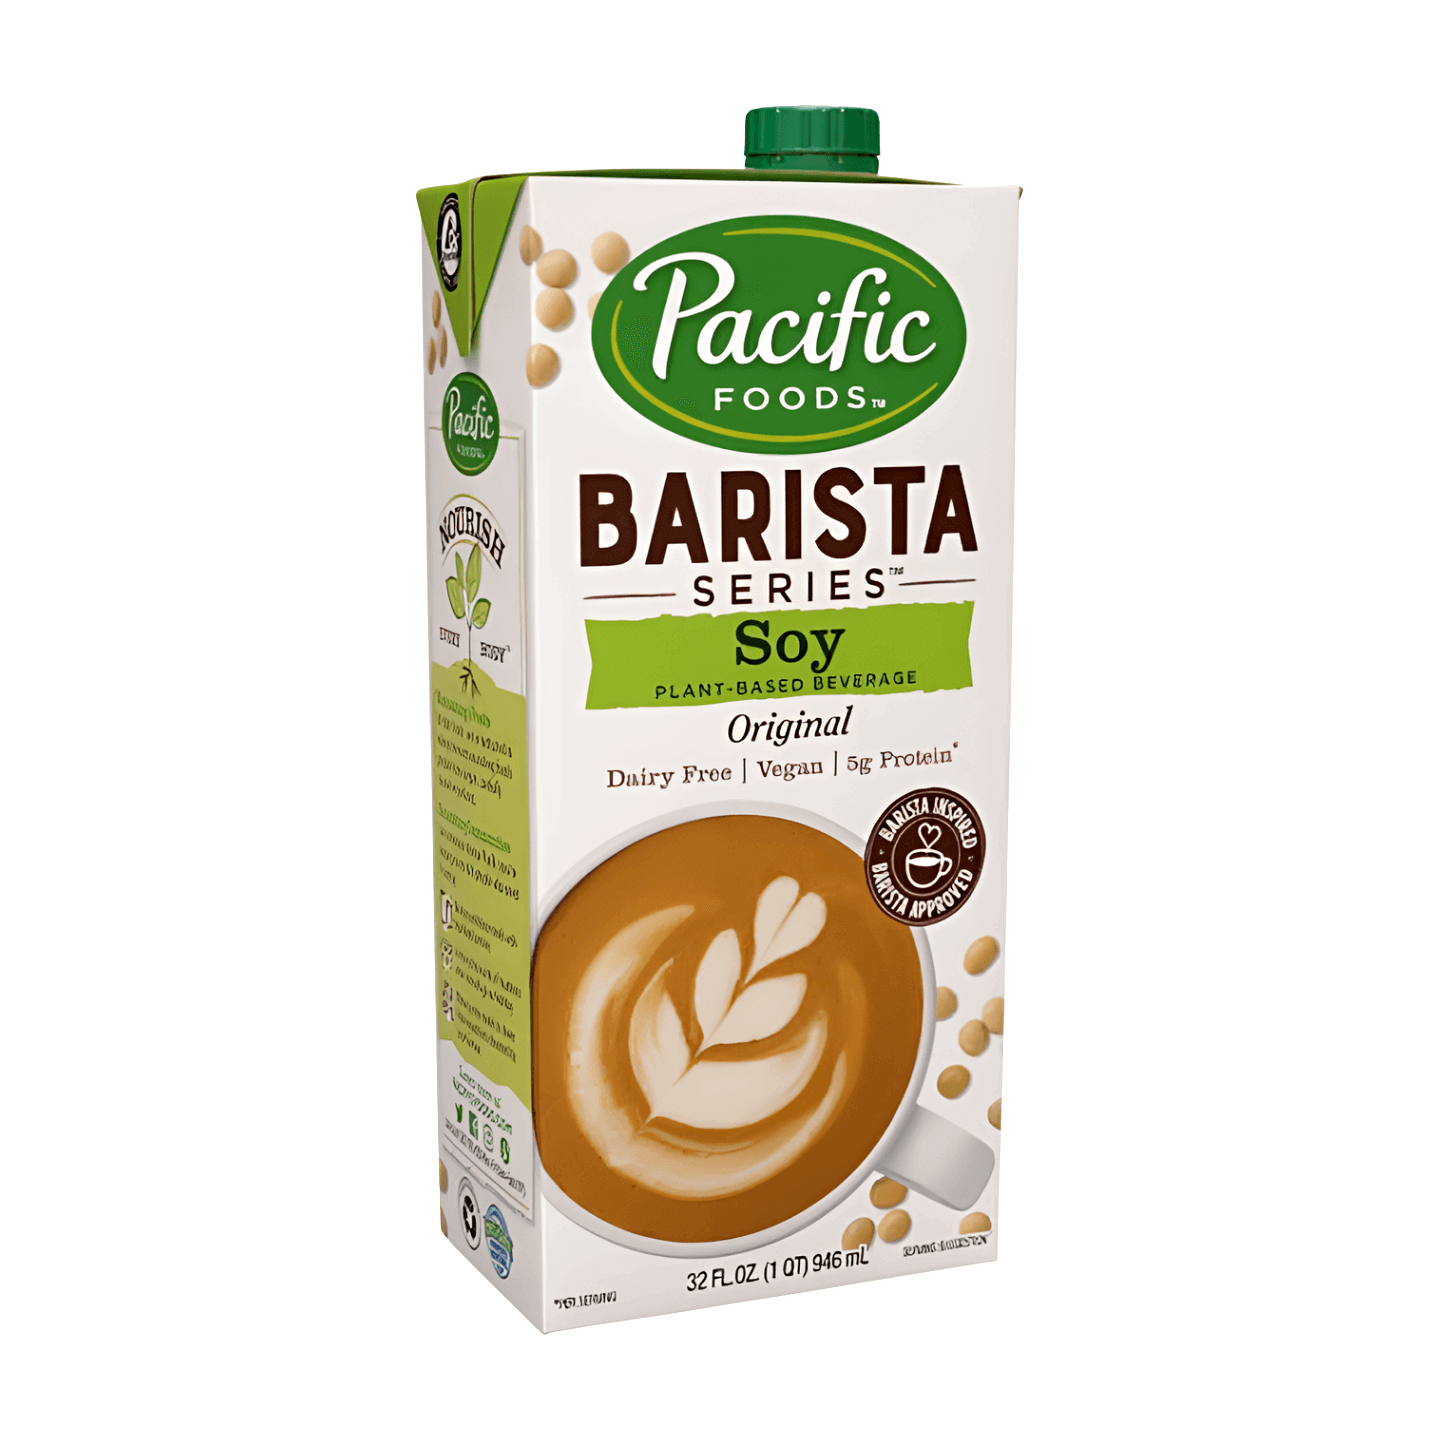 Pacific Foods Barista Series Soy Original